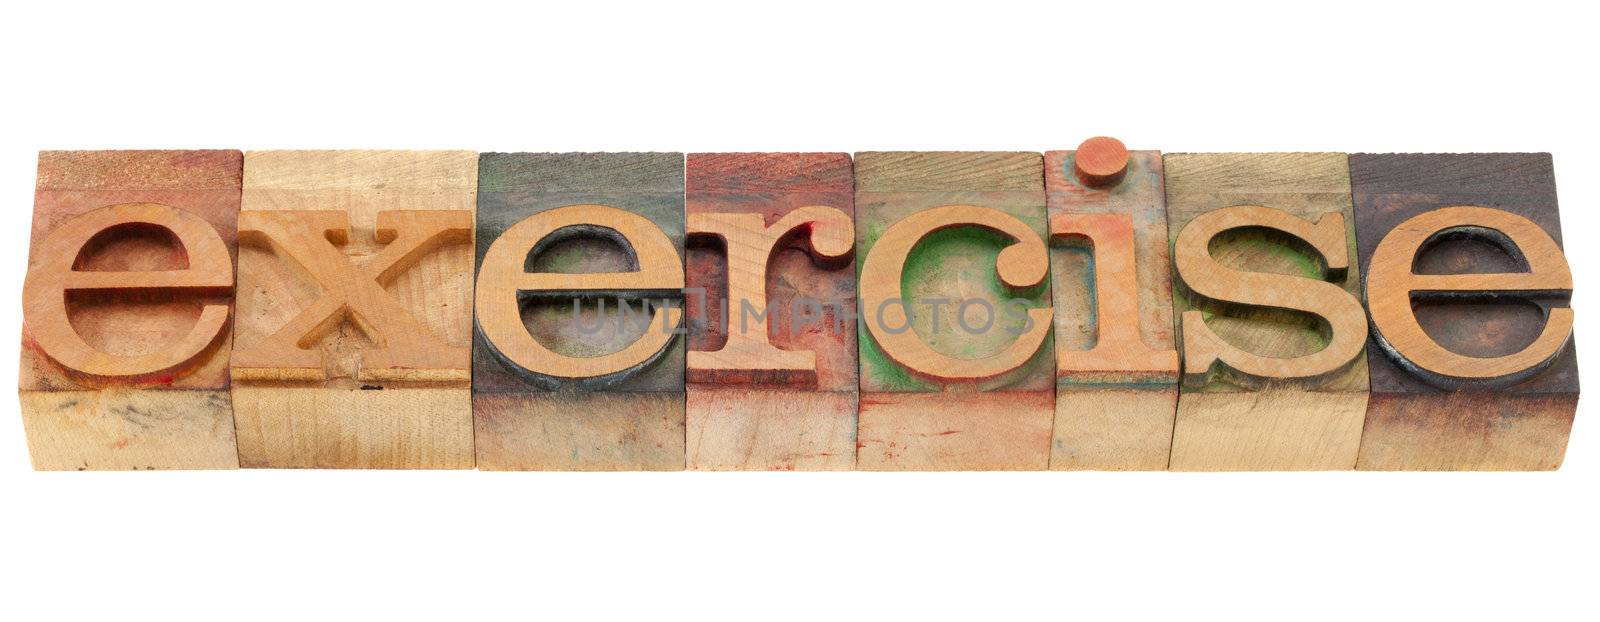 exercise word in letterpress type by PixelsAway